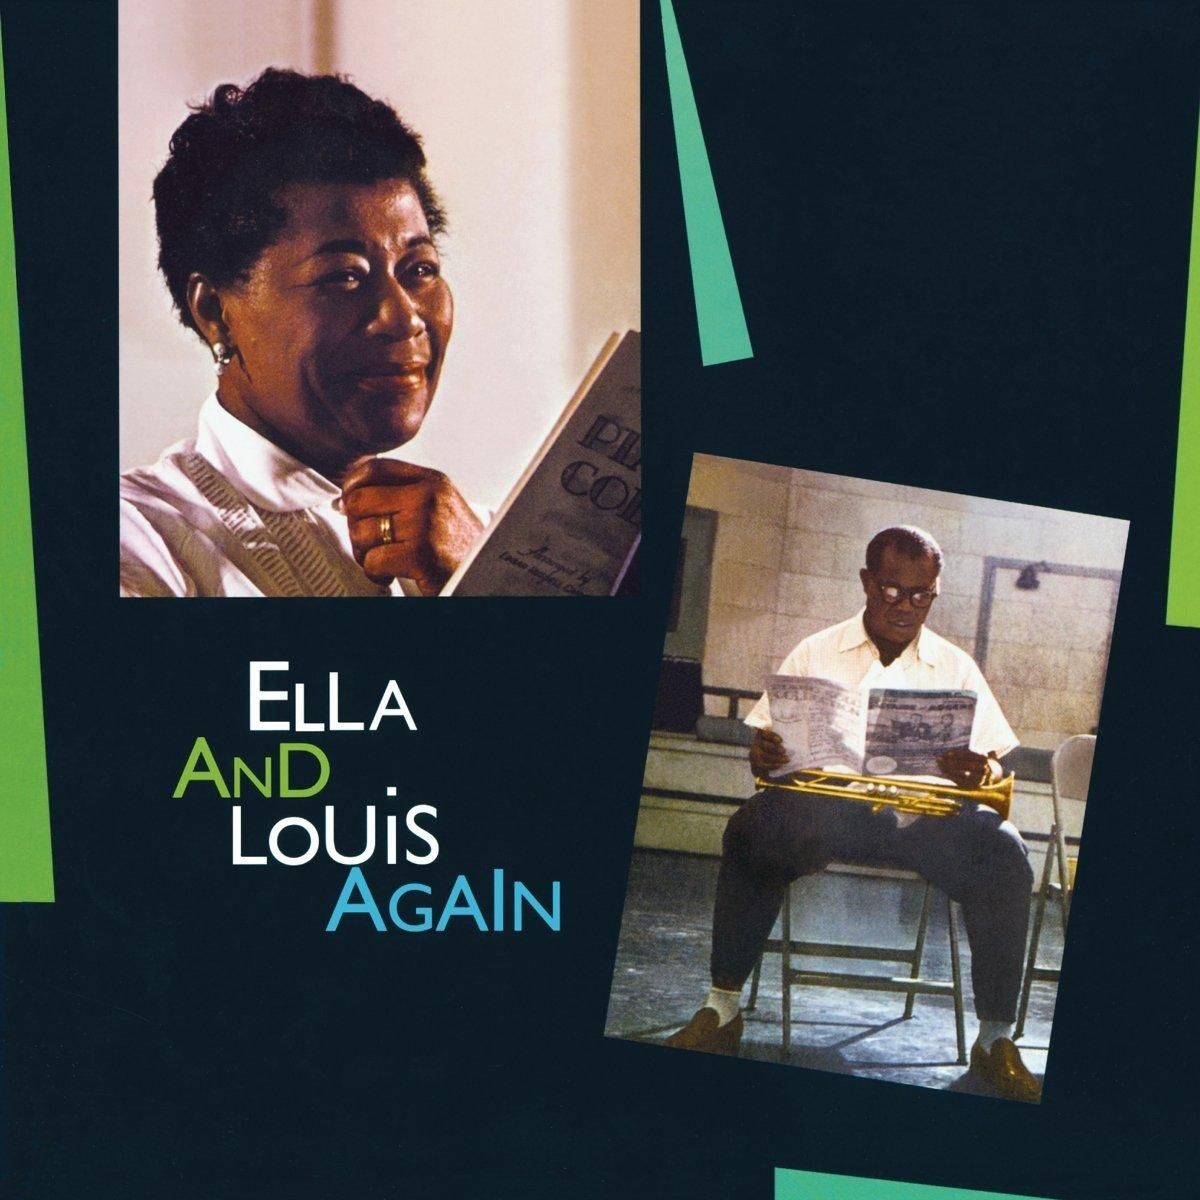 Louis Armstrong, Fitzgerald (Vinyl) Again - And - Louis Ella Ella